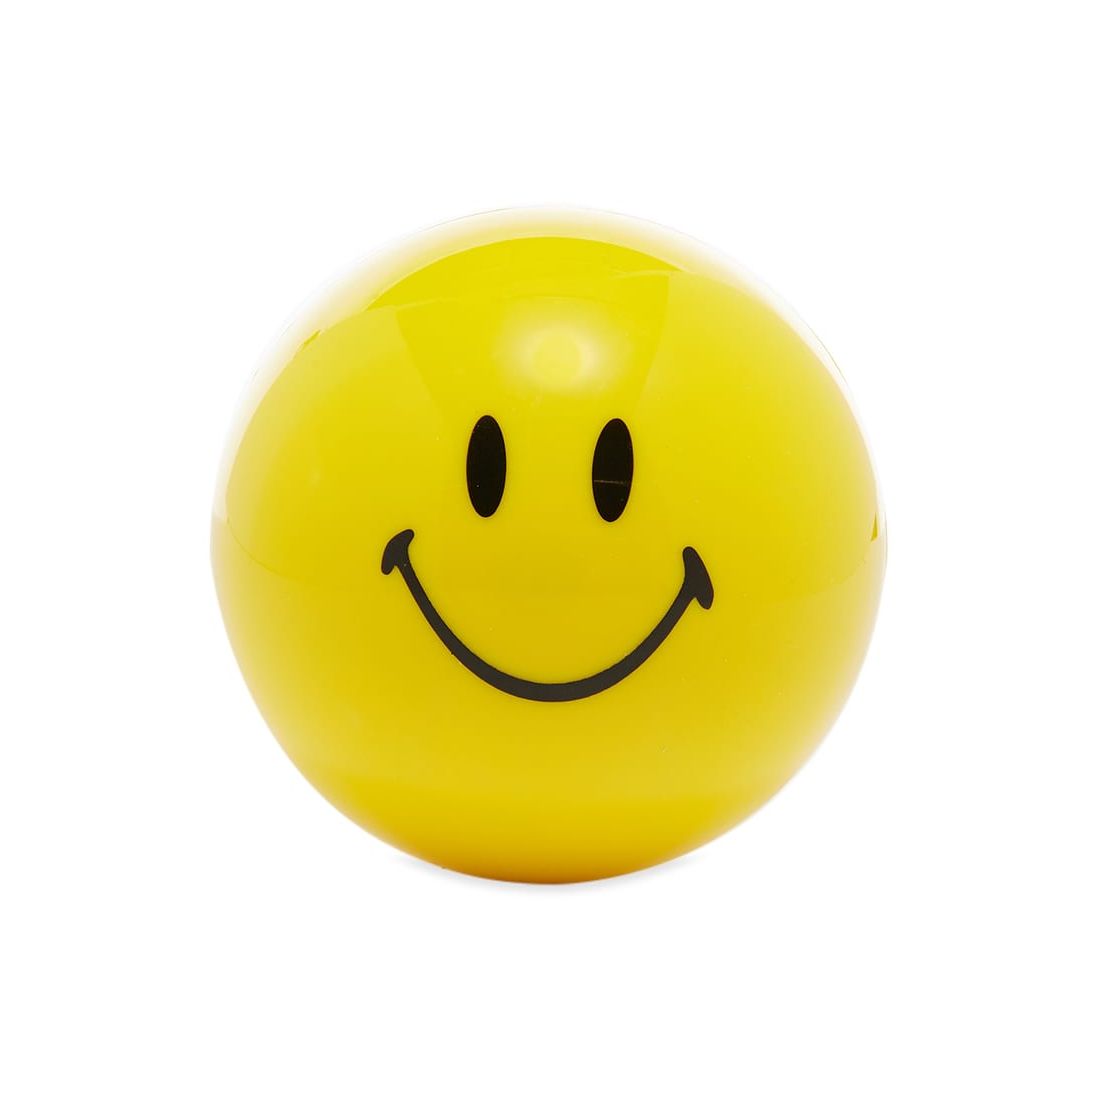 Chinatown Market Smiley Magic 8-Ball Yellow